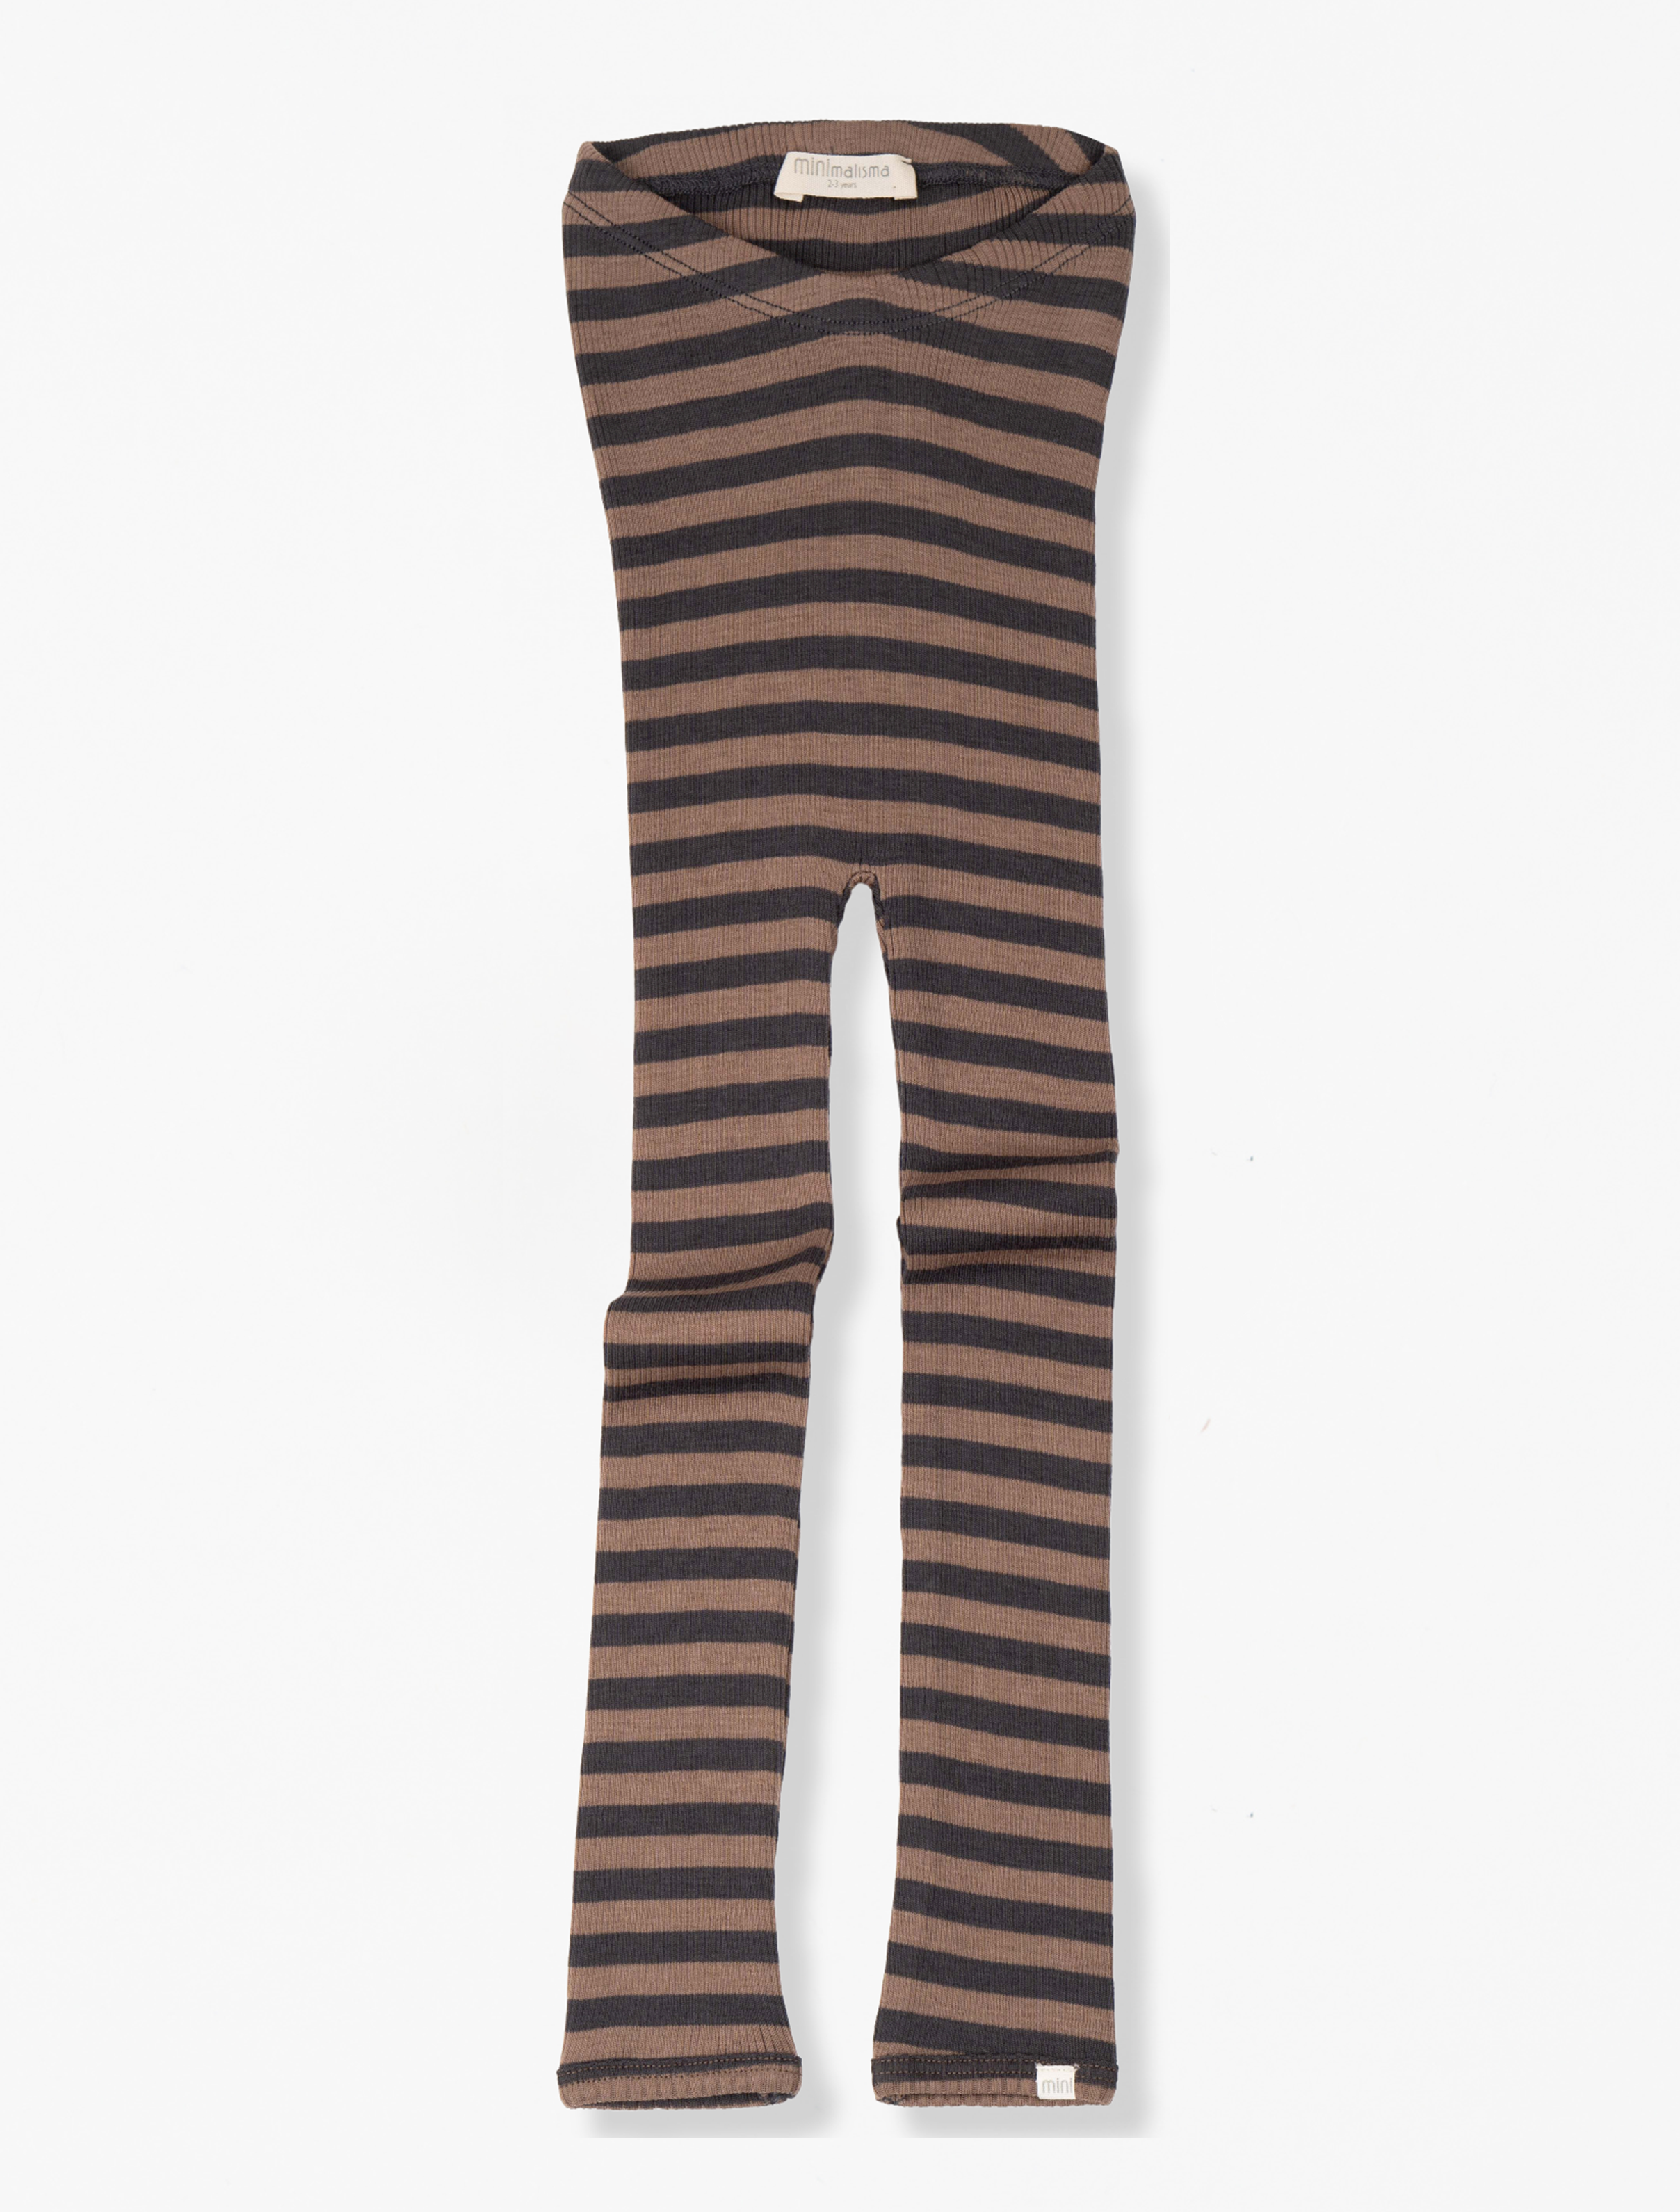 Arona Merino Wool Legging in Brown Stripe – Spilled Milk